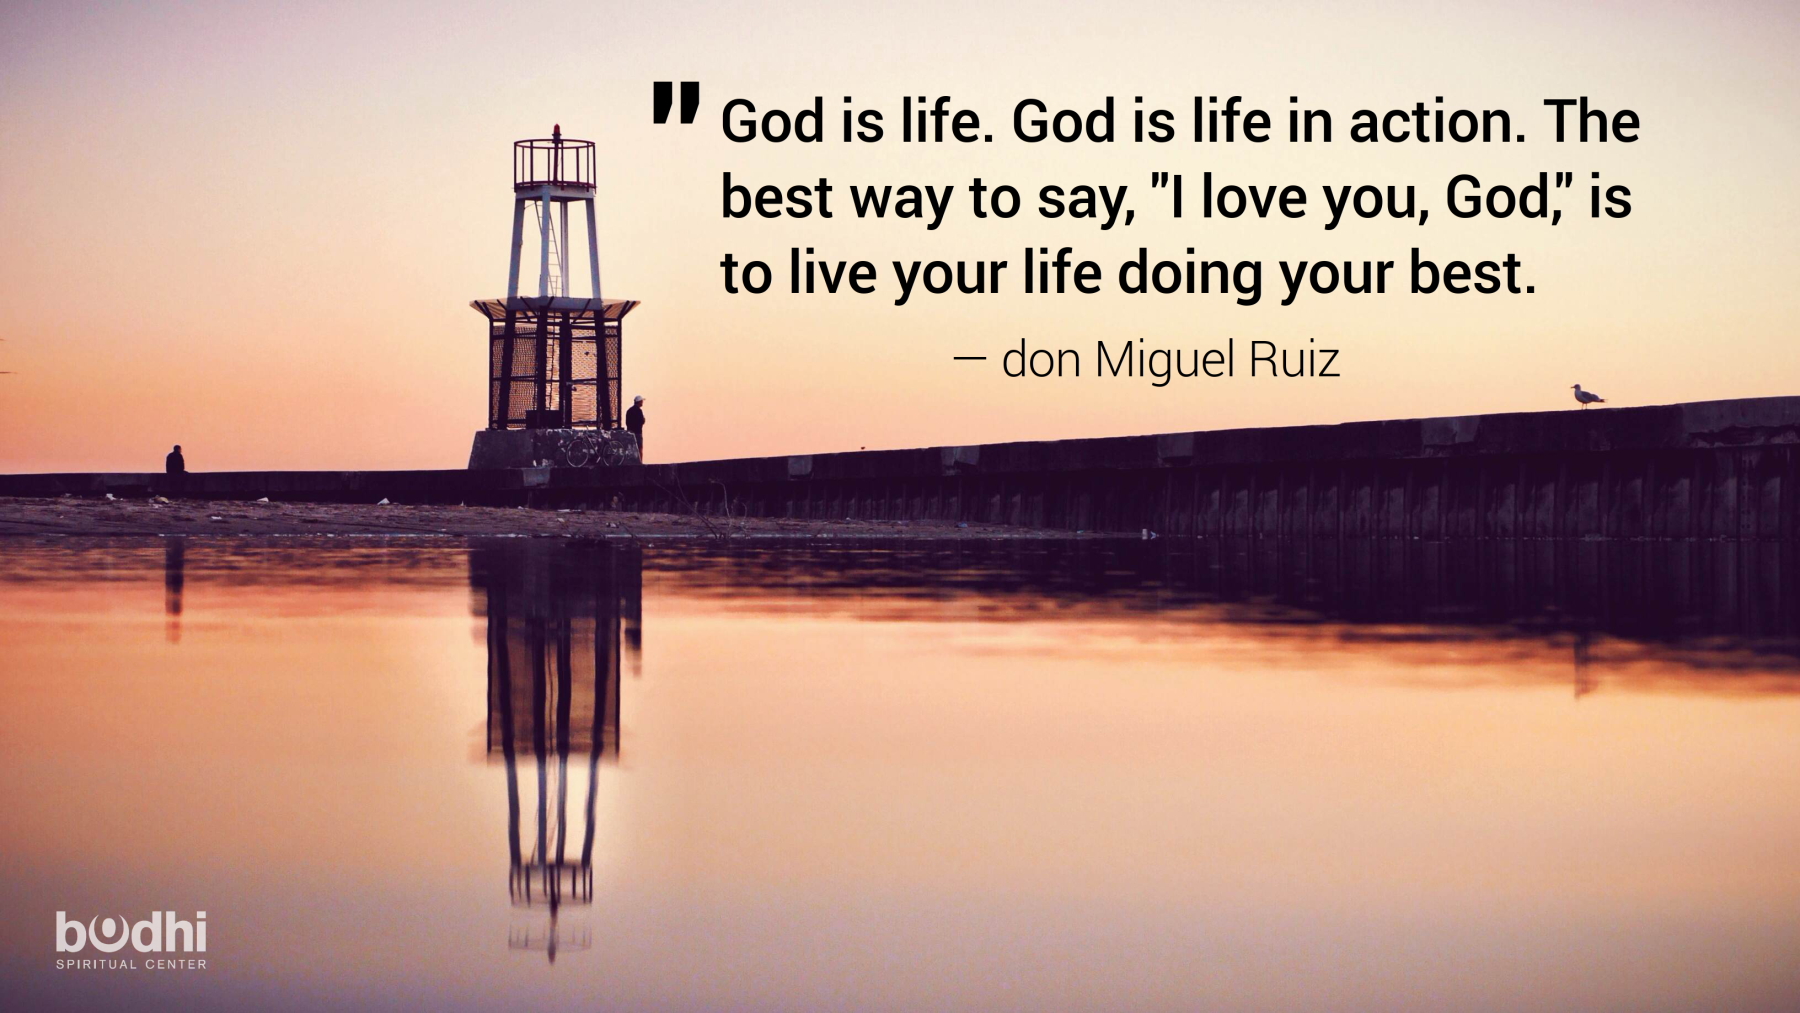 God is life. Miguel Ruiz quotes.